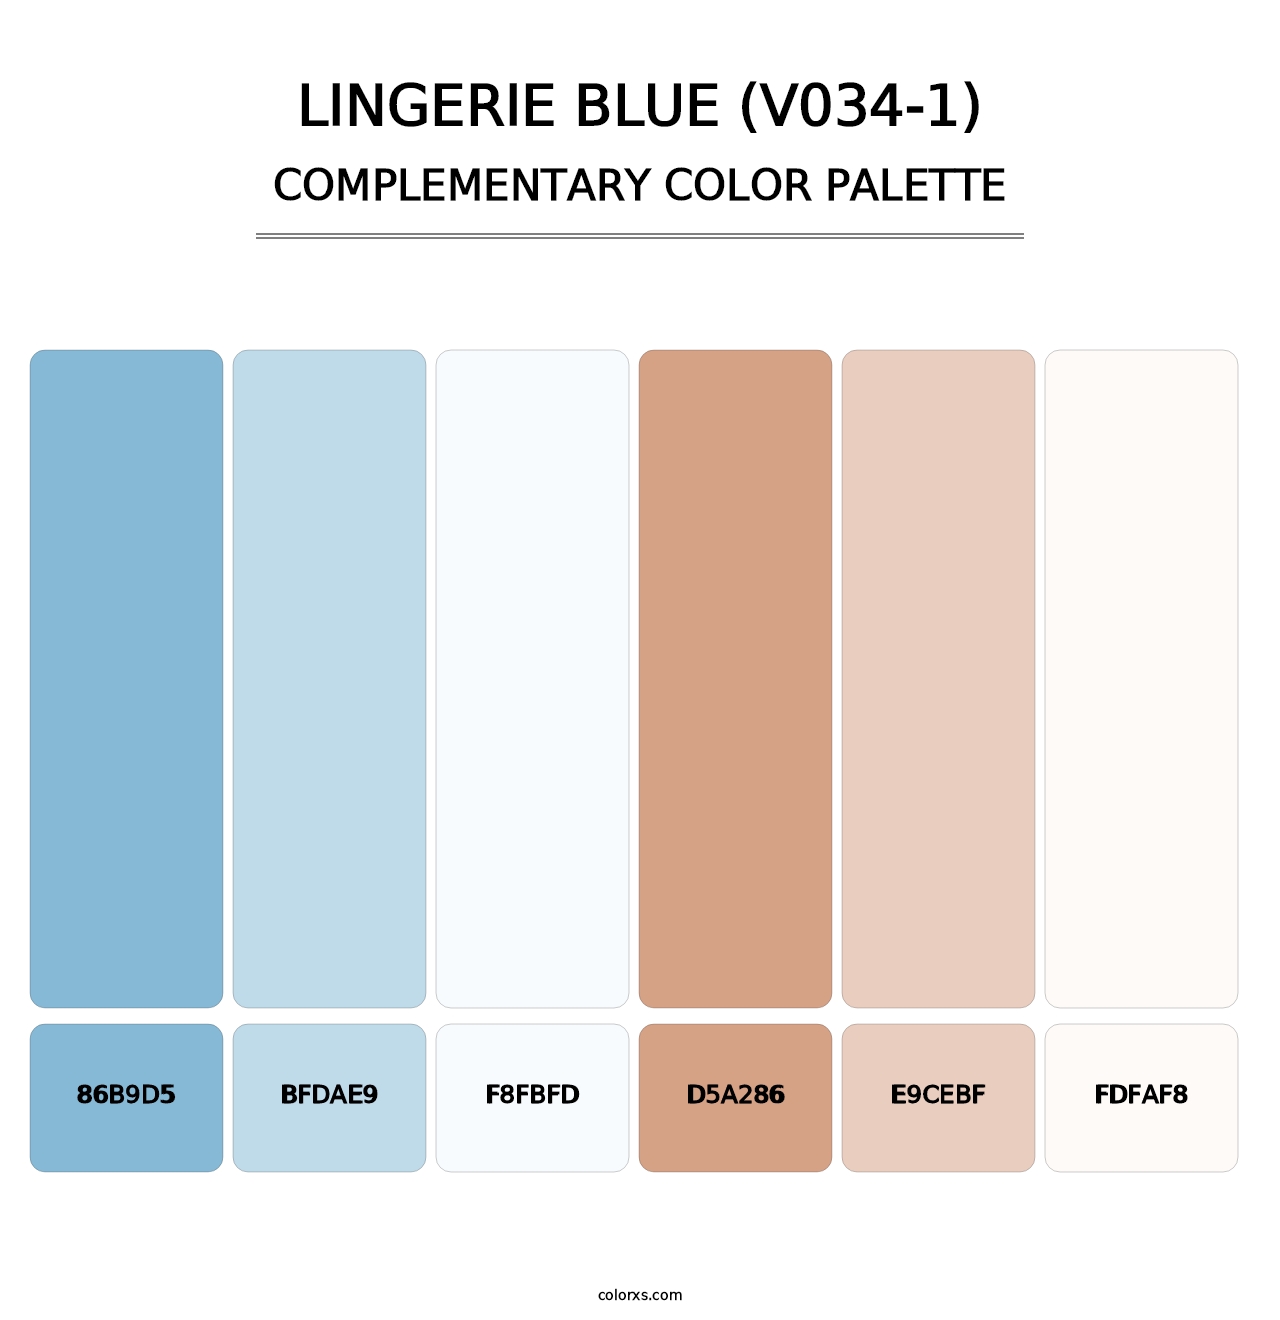 Lingerie Blue (V034-1) - Complementary Color Palette